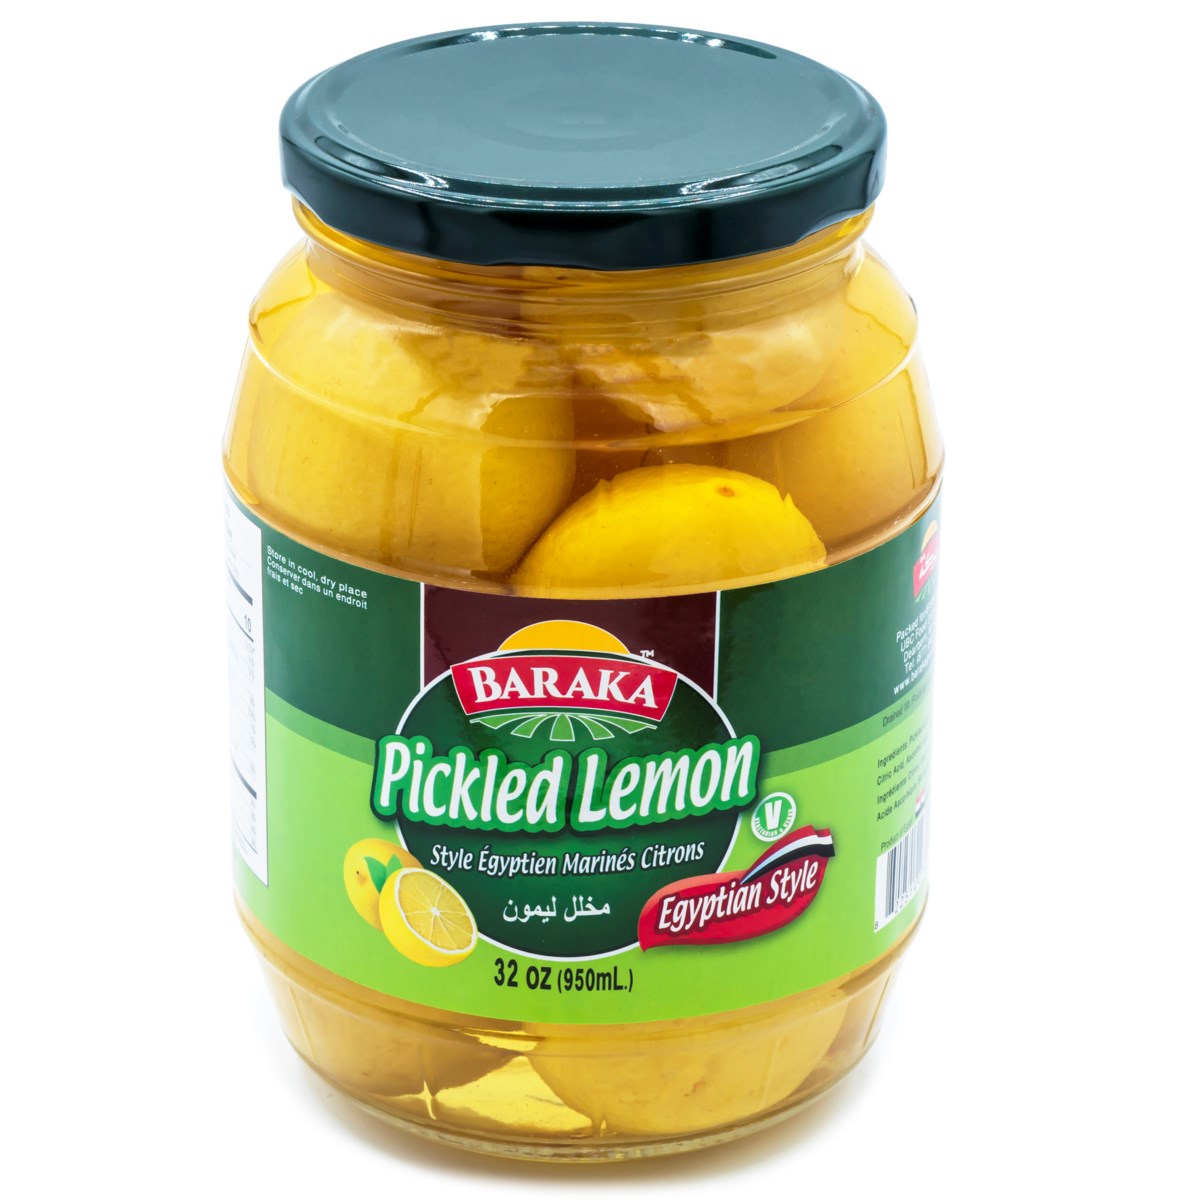 Pickled Lemon Egyptian Style "Baraka" 950g x 6